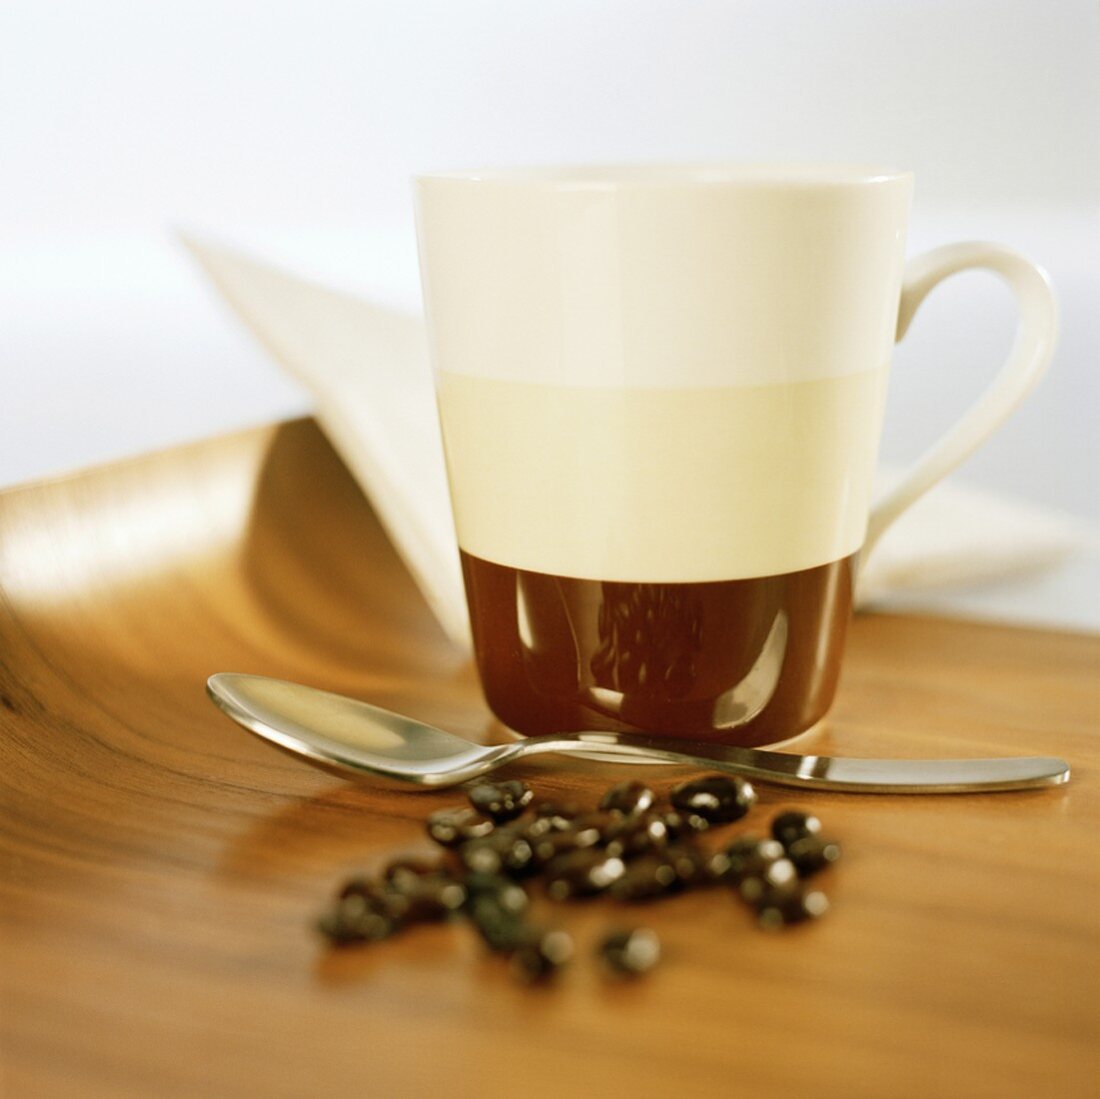 A coffee mug, spoon and coffee beans